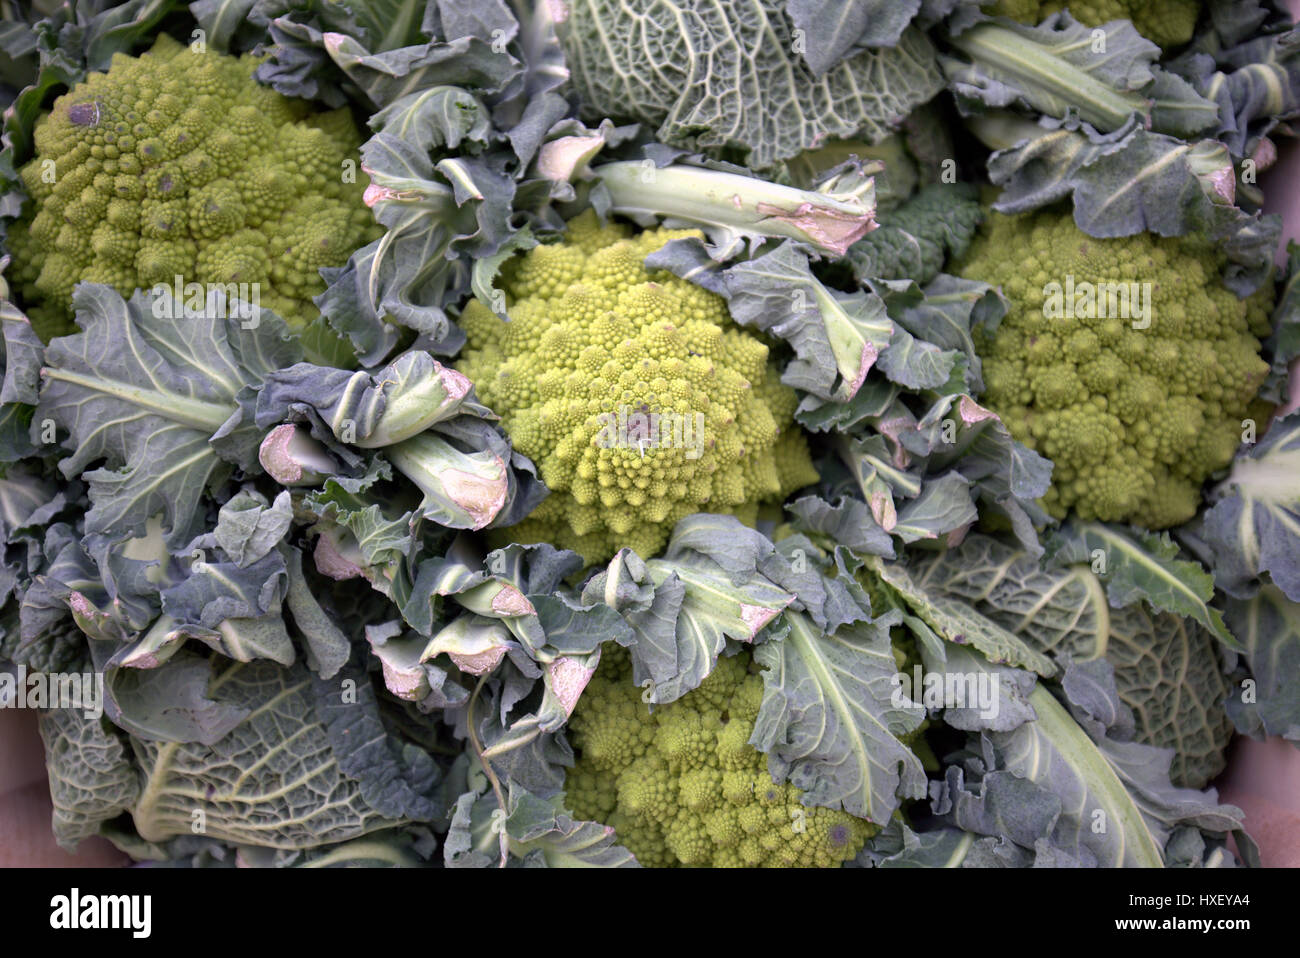 fruit and vegetable stall organic Romanesco broccoli Stock Photo